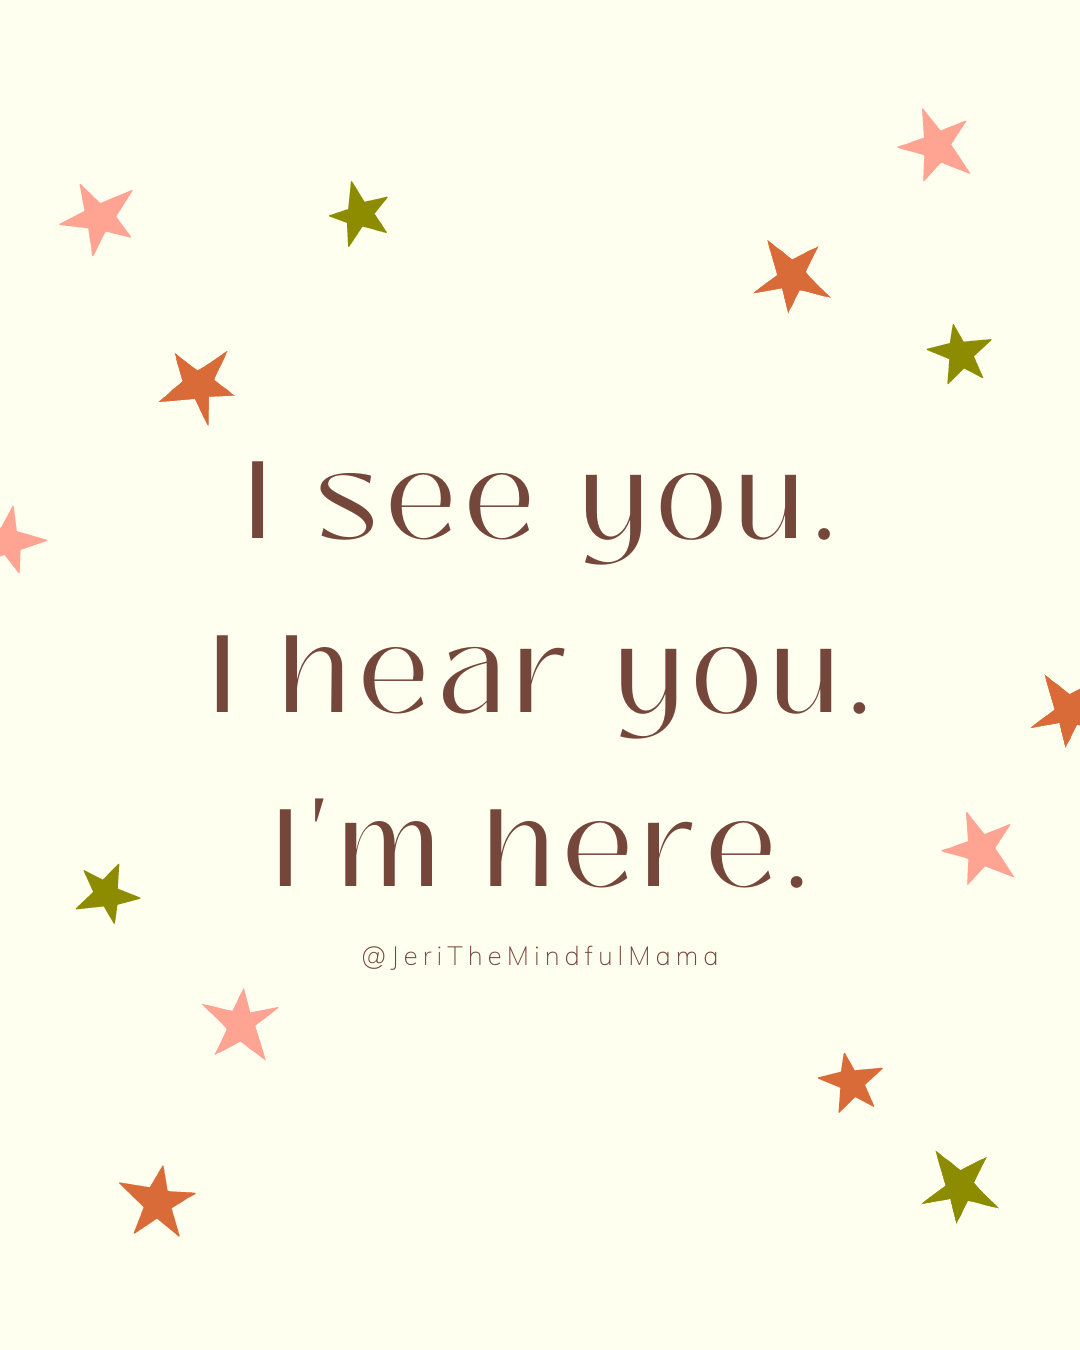 I see you. I hear you. I'm here. @JeriTheMindfulMama